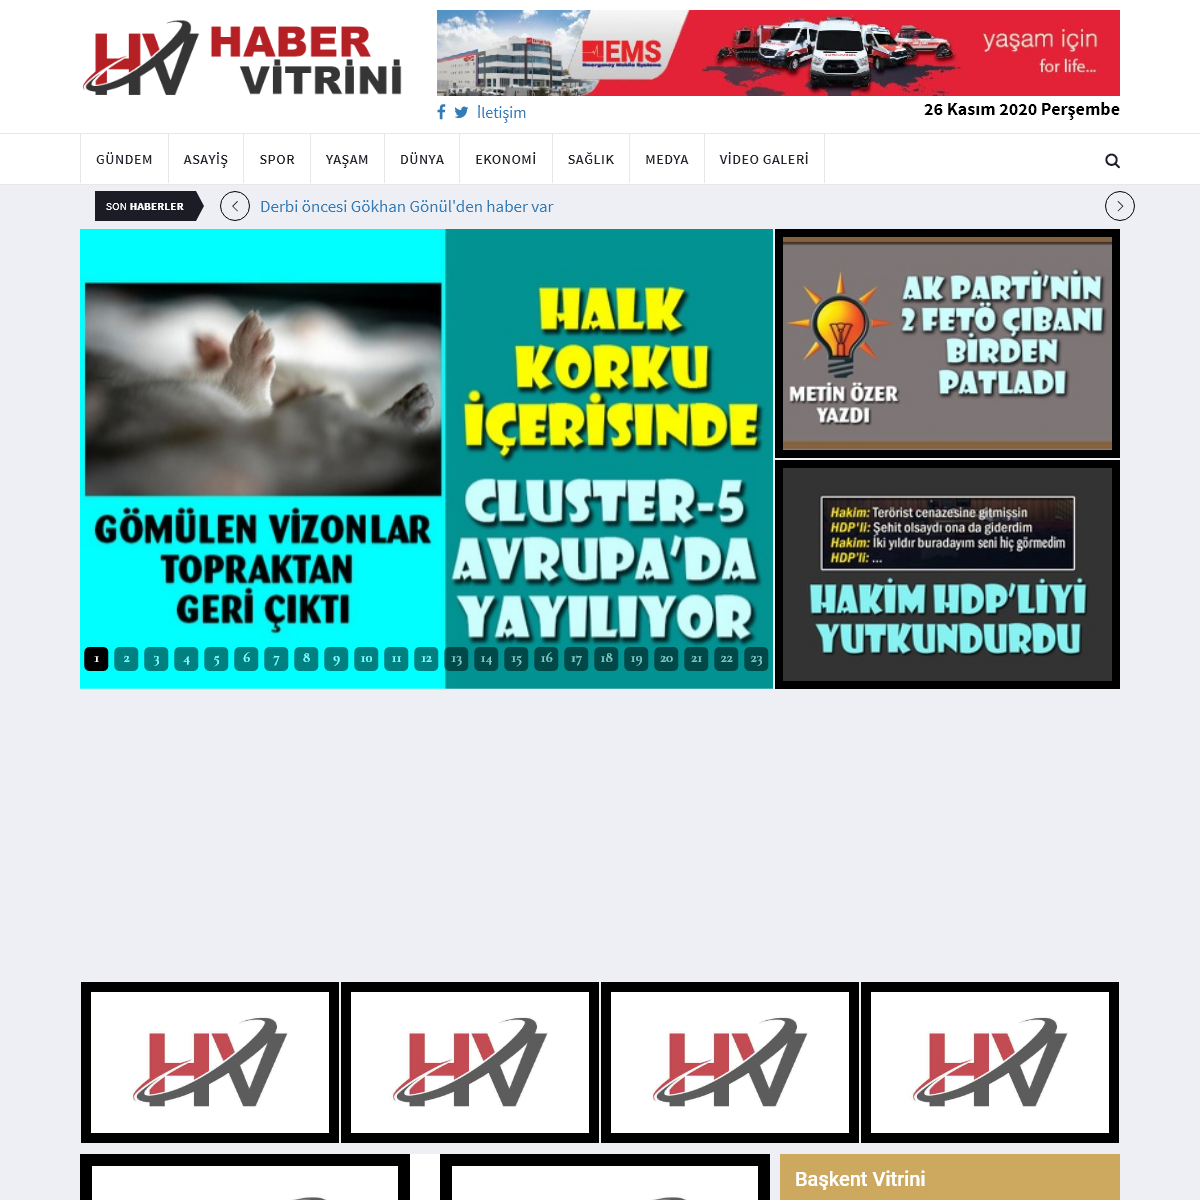 Habervitrini.com